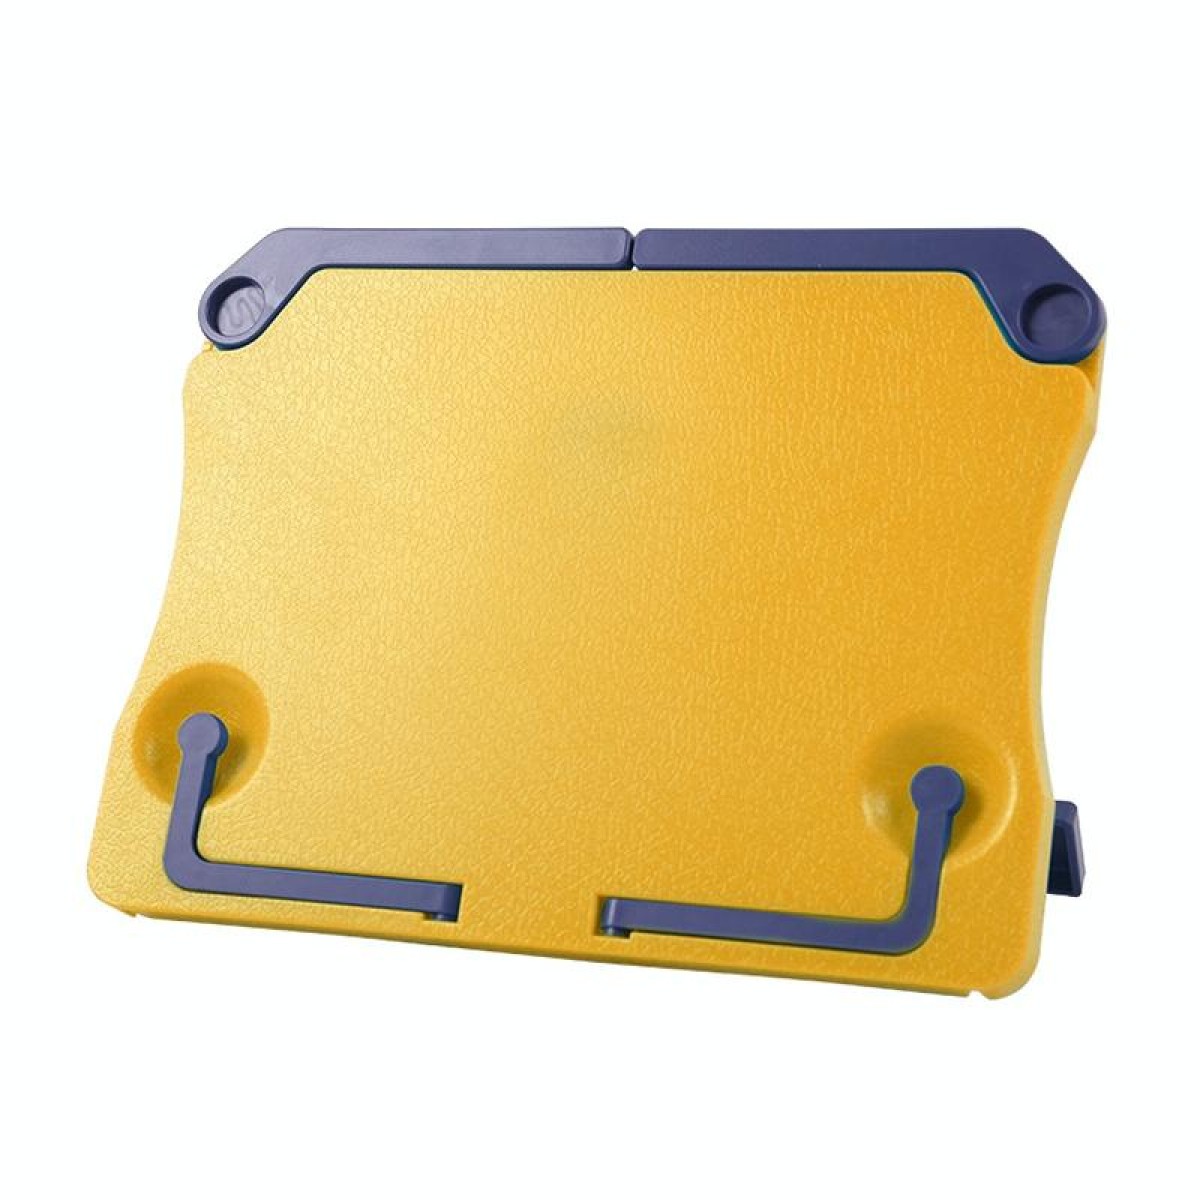 Portable Foldable Desktop Music Stand(Yellow)